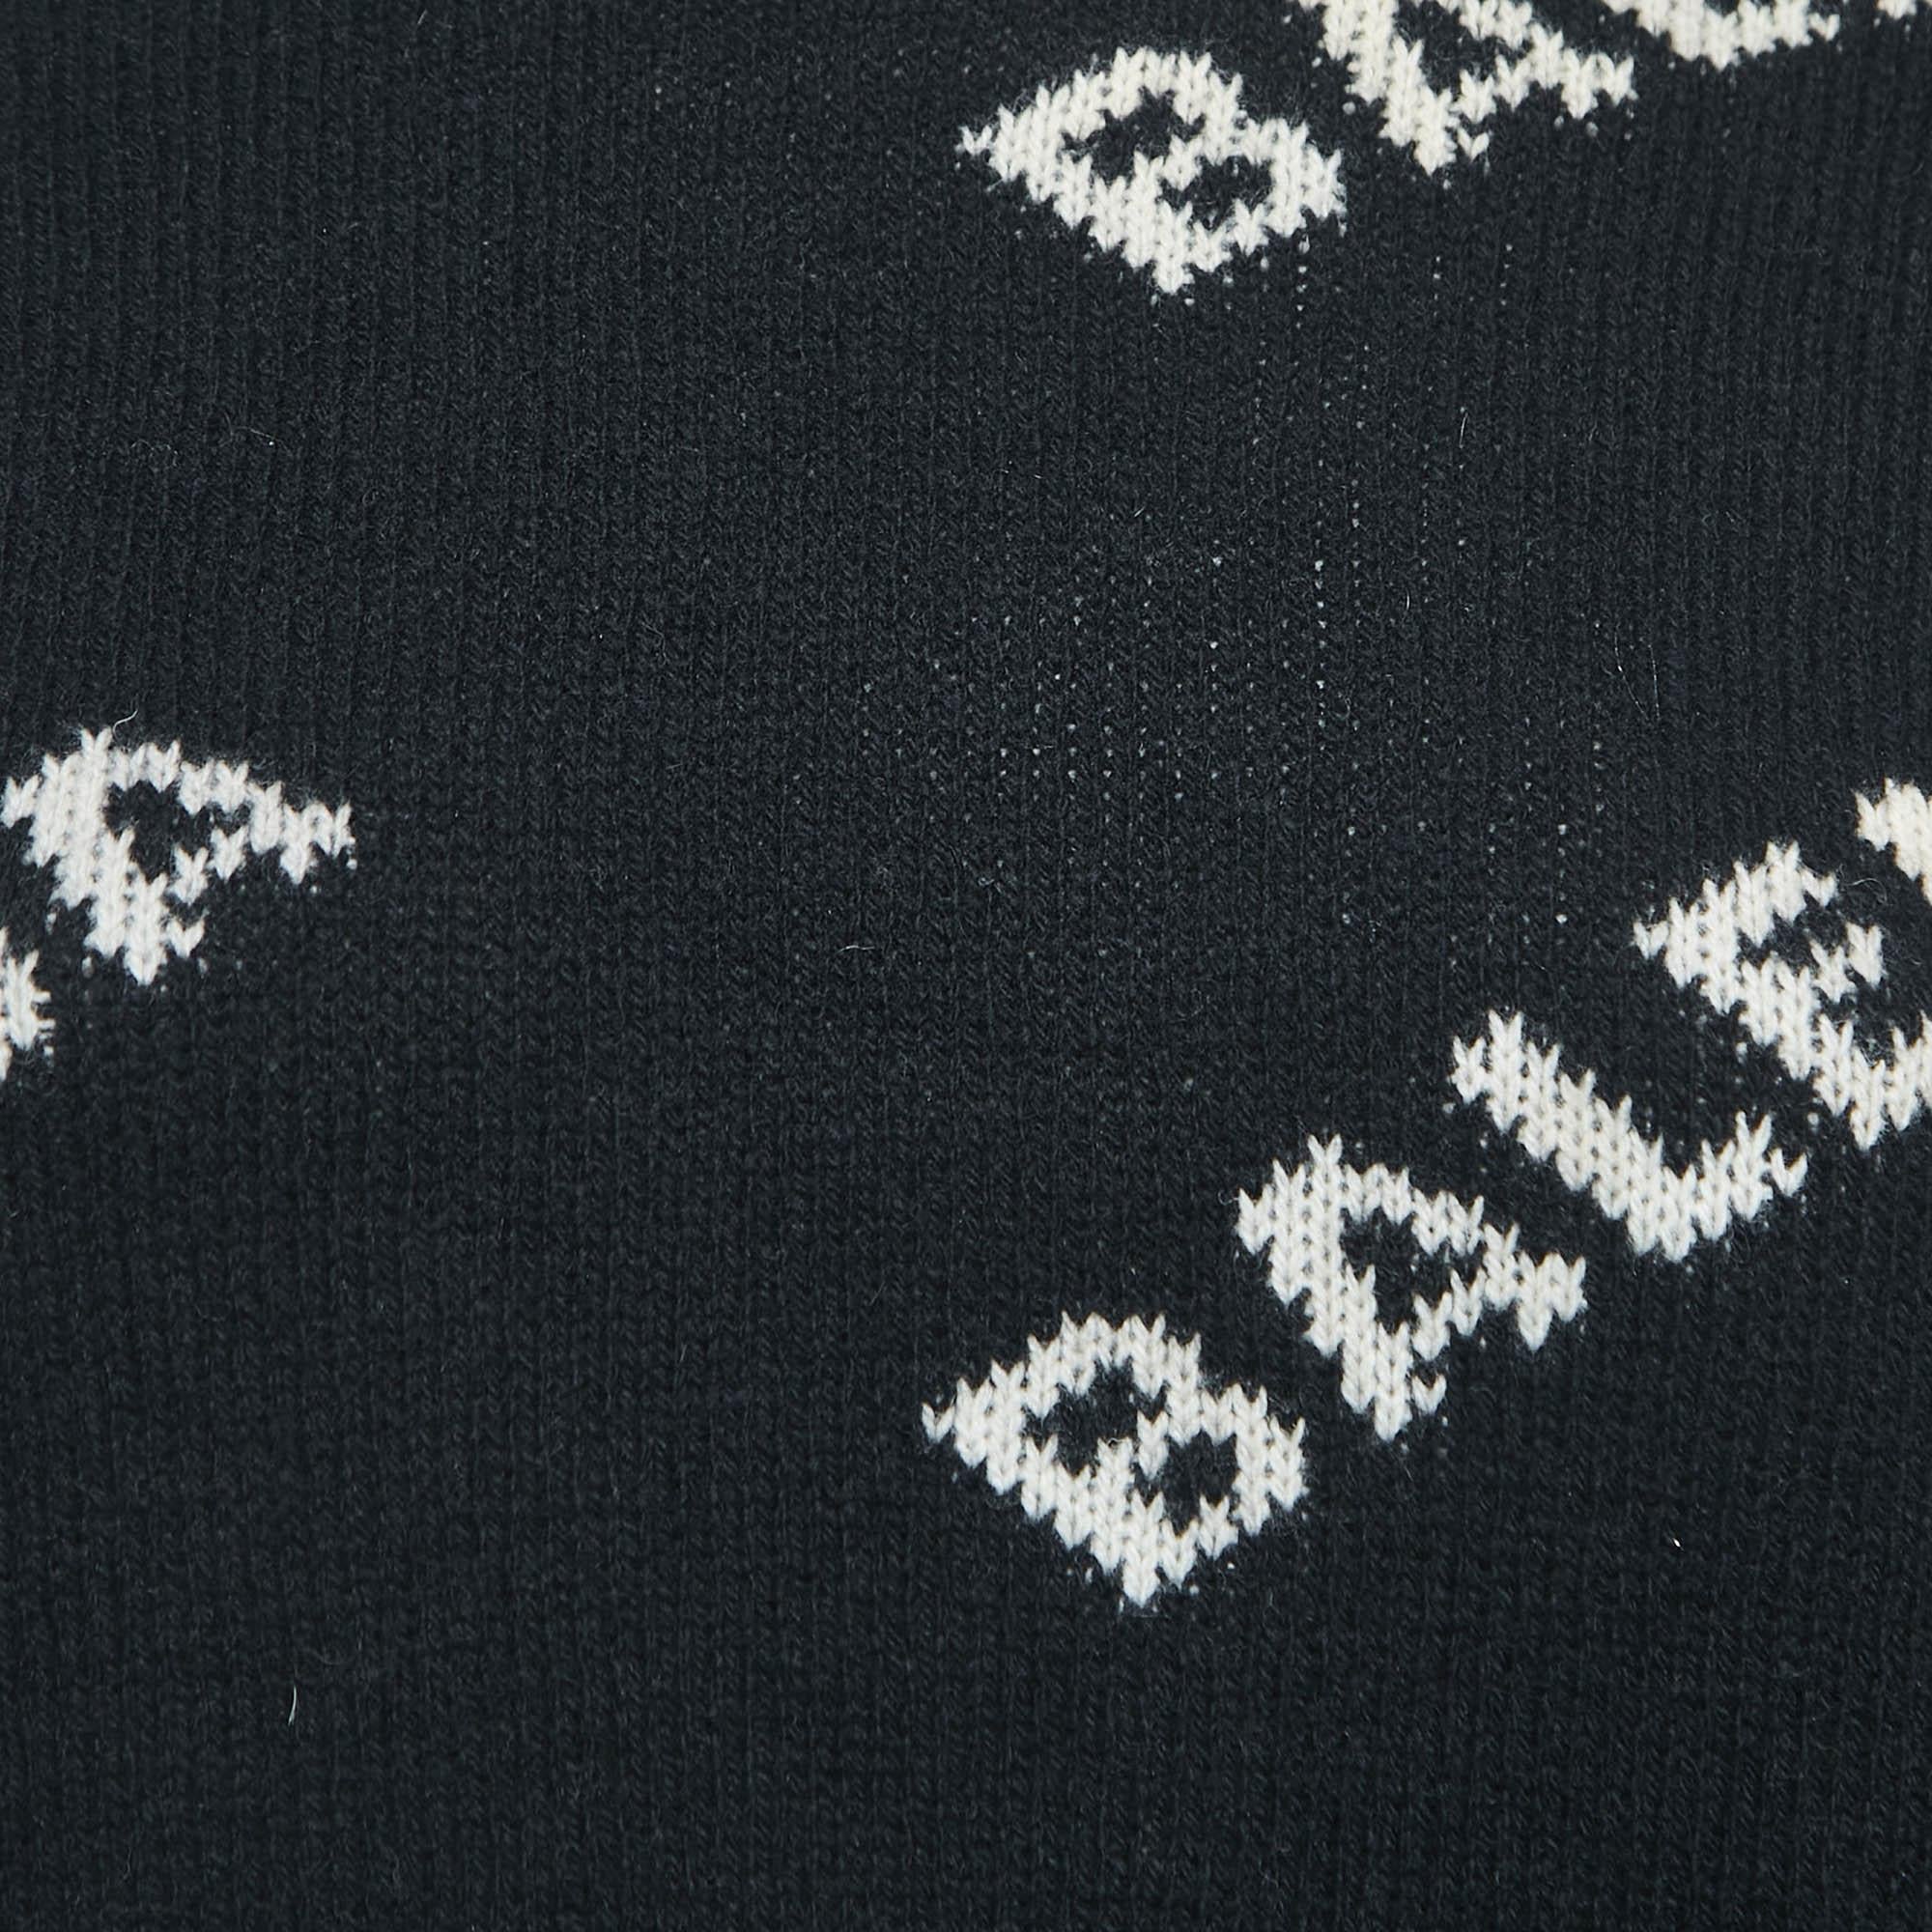 Balenciaga Black All-Over Logo Wool-Blend Jumper S In Good Condition For Sale In Dubai, Al Qouz 2